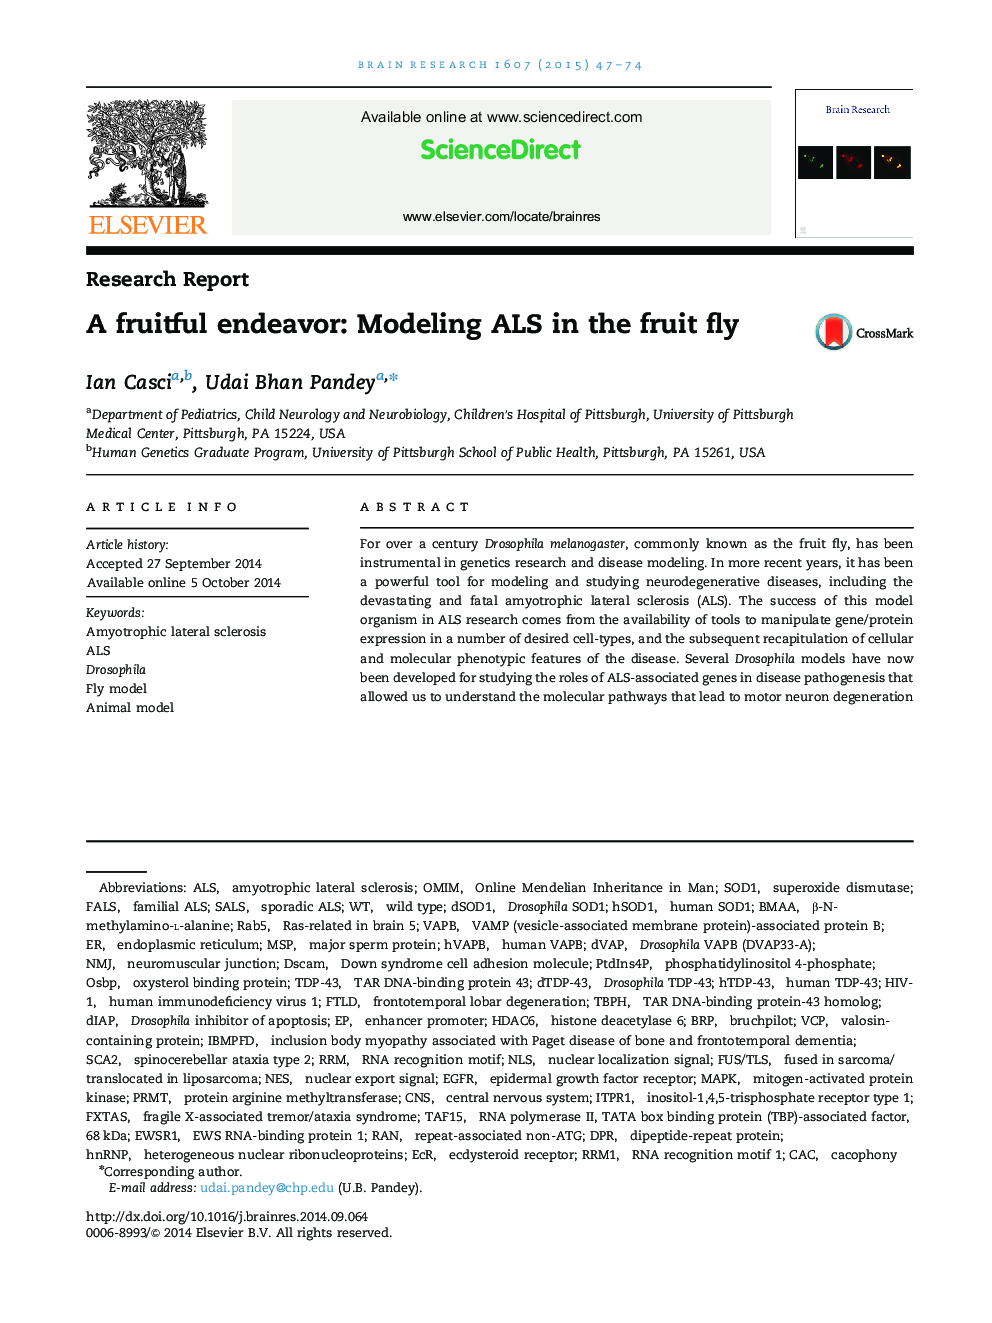 A fruitful endeavor: Modeling ALS in the fruit fly